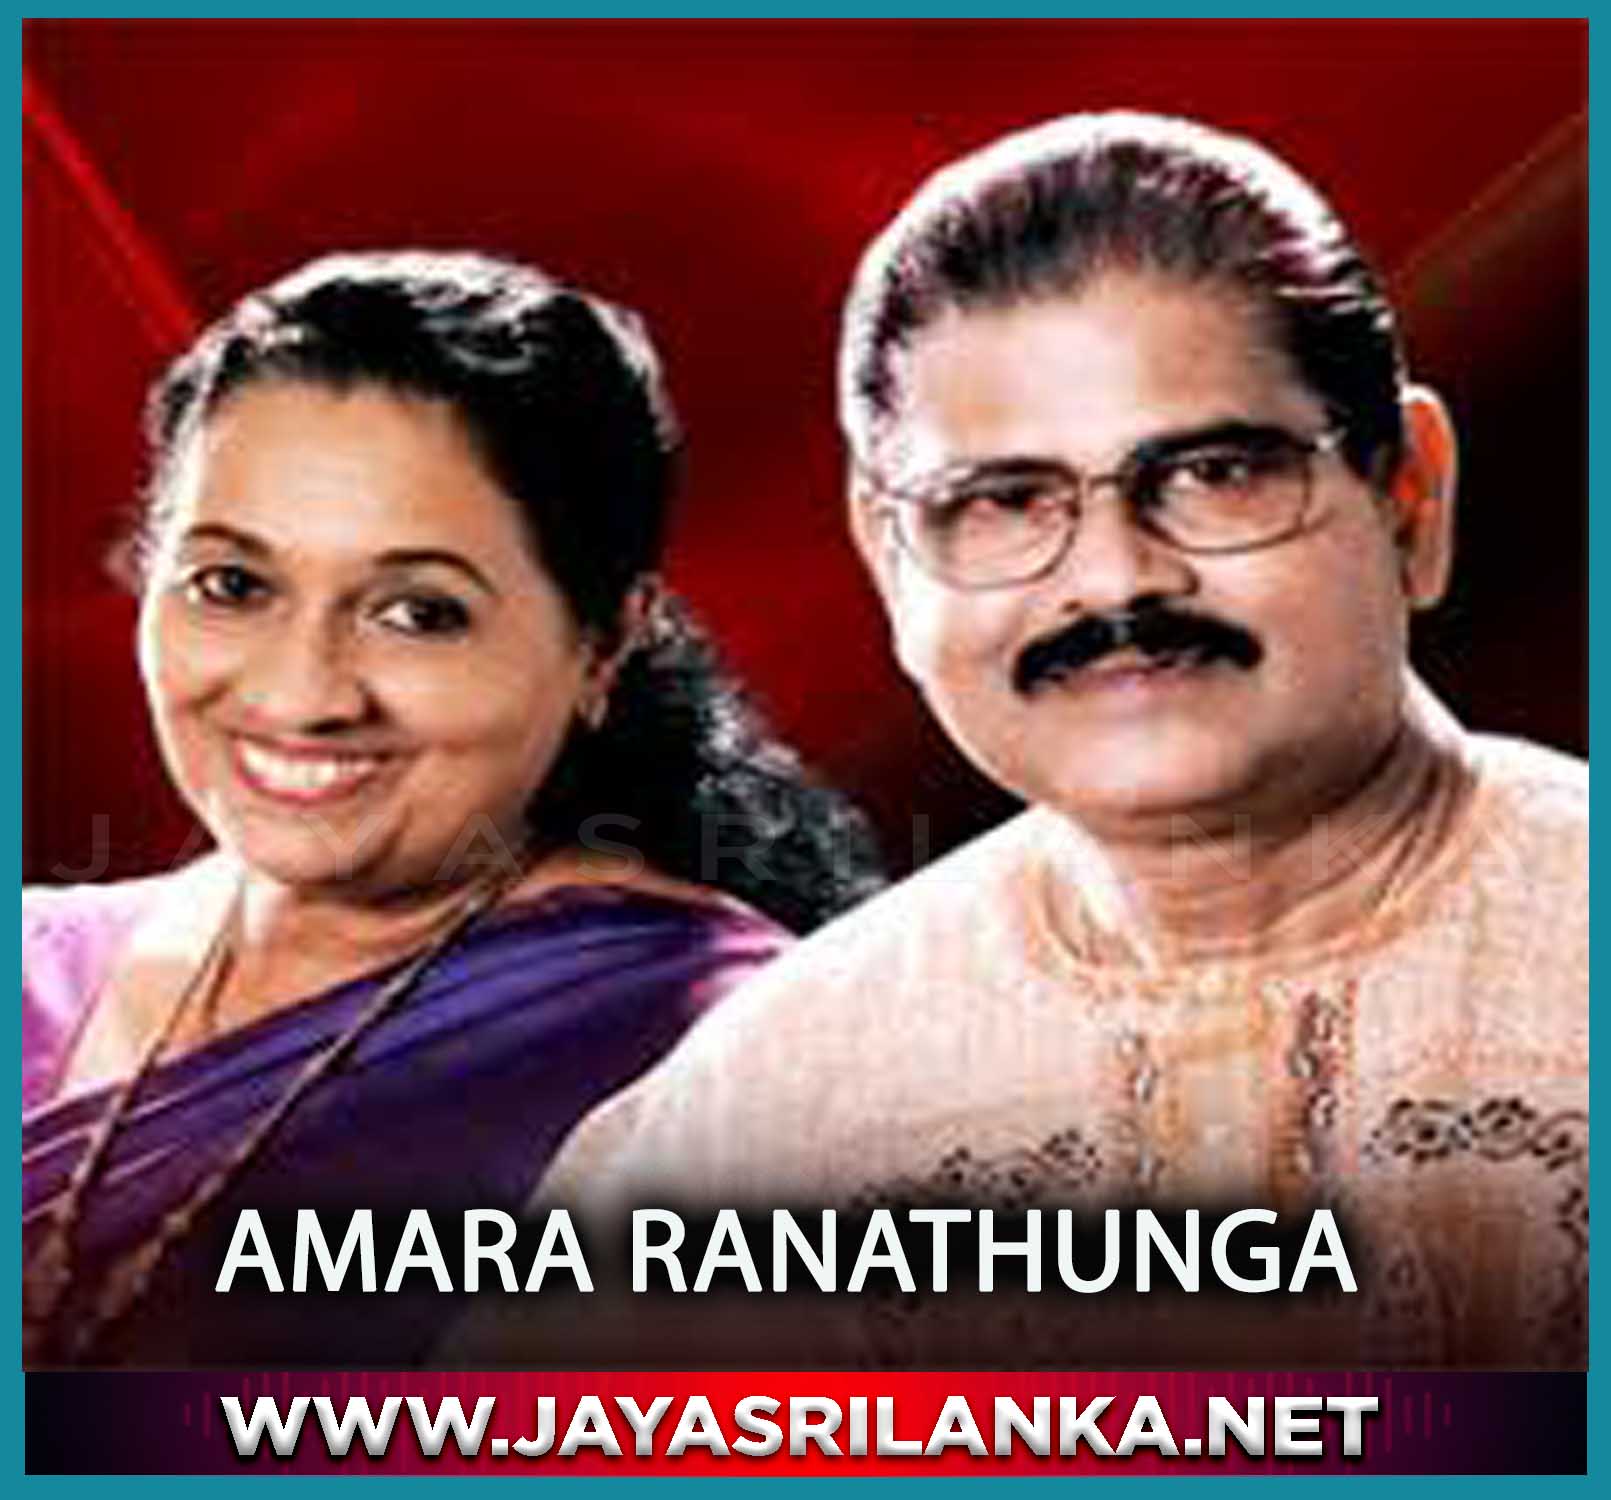 Pera Apa Athinatha Gena - Amara Ranathunga mp3 Image